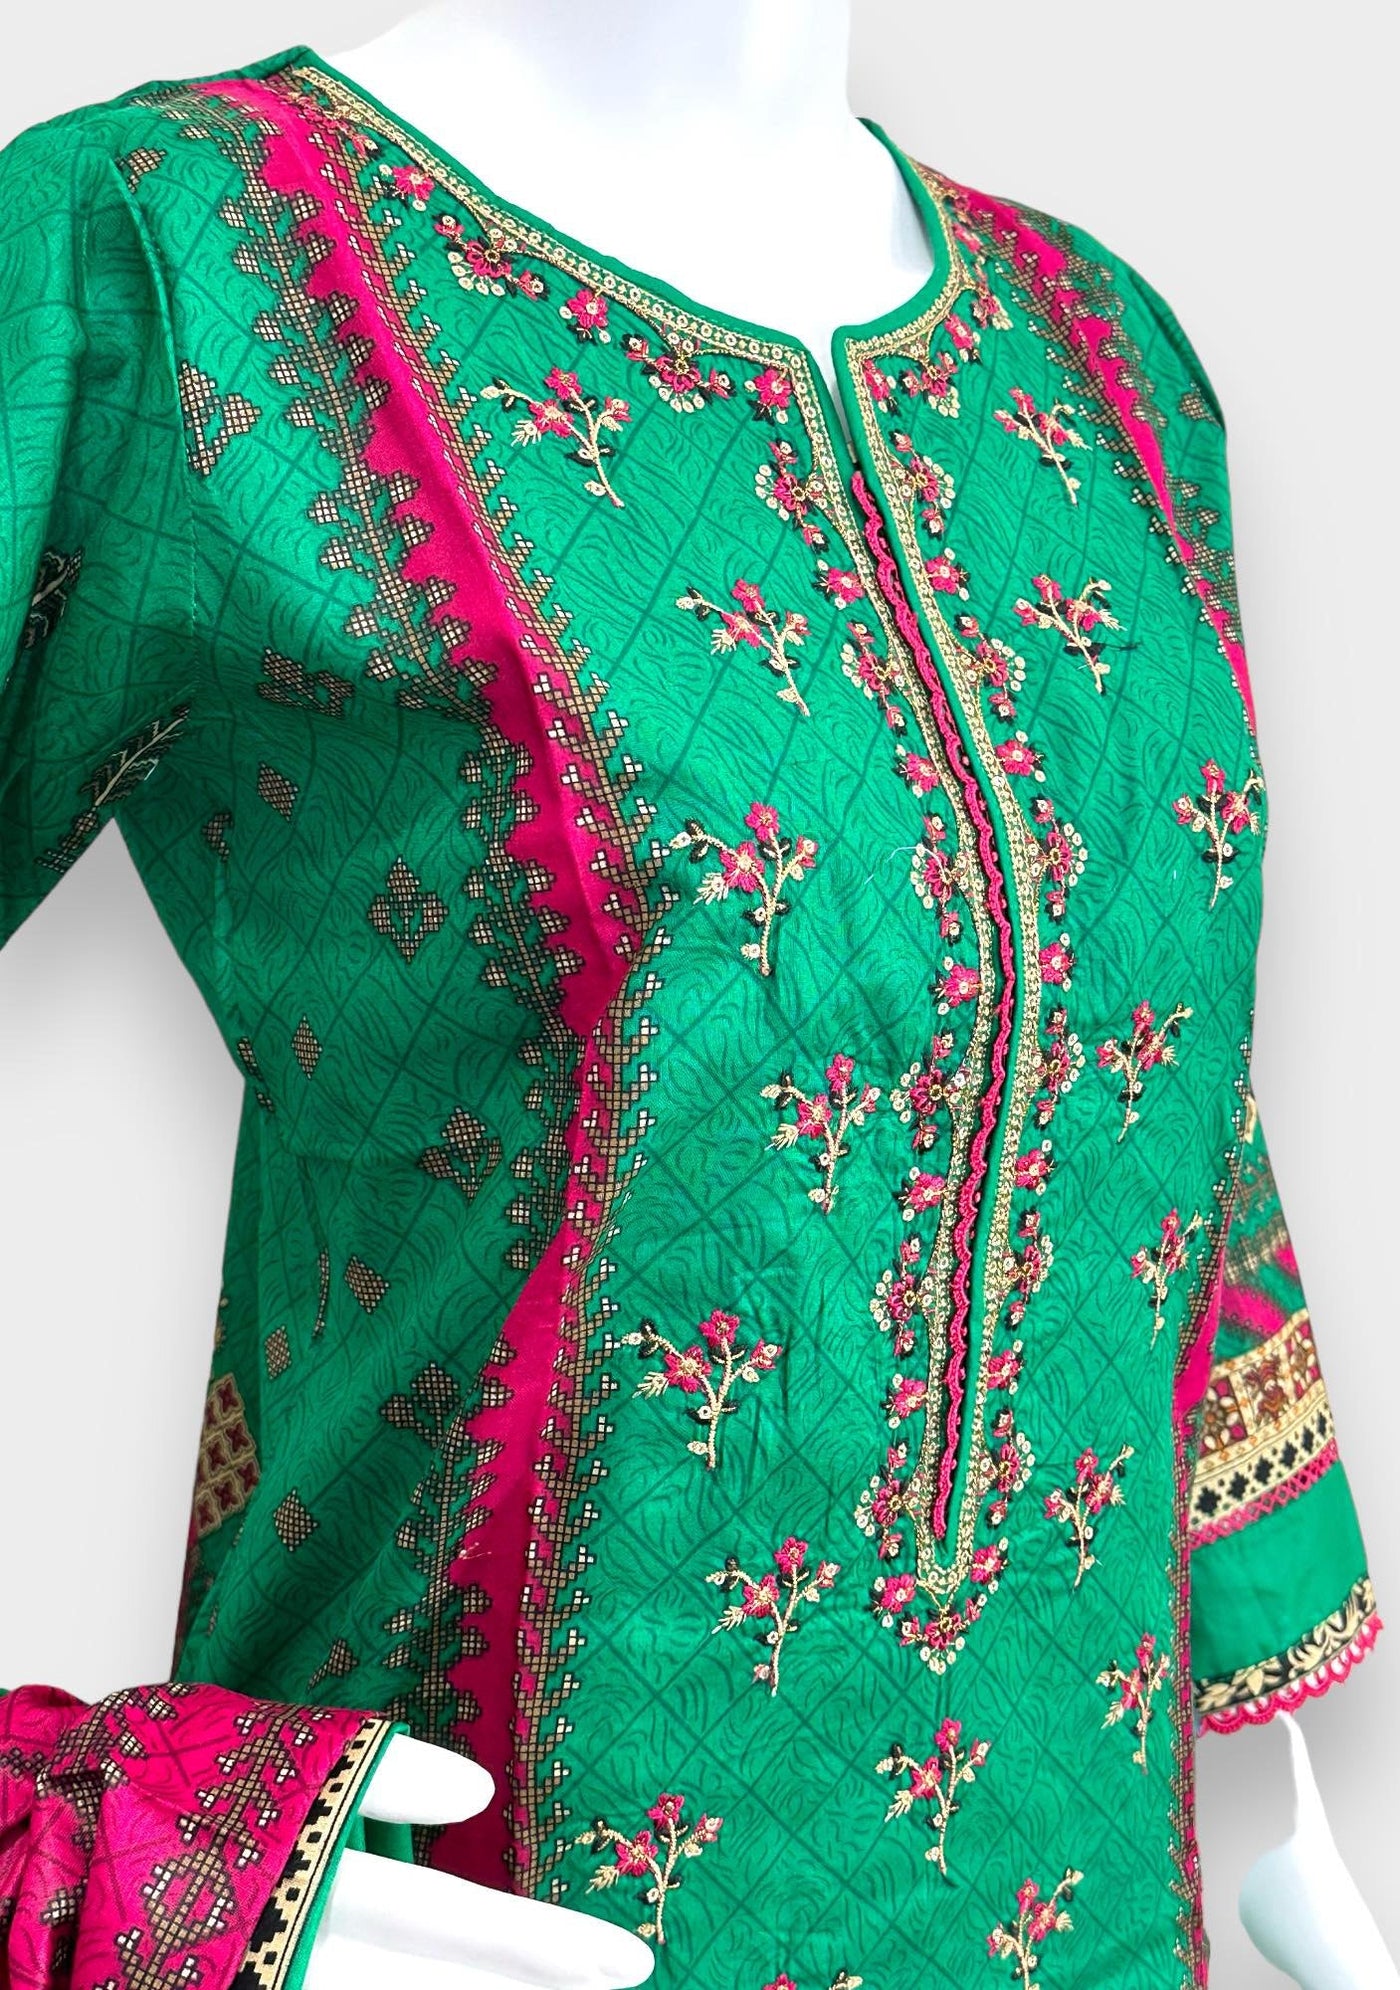 Embroidered 3 Pieces Pakistani Cotton Dress - db24610